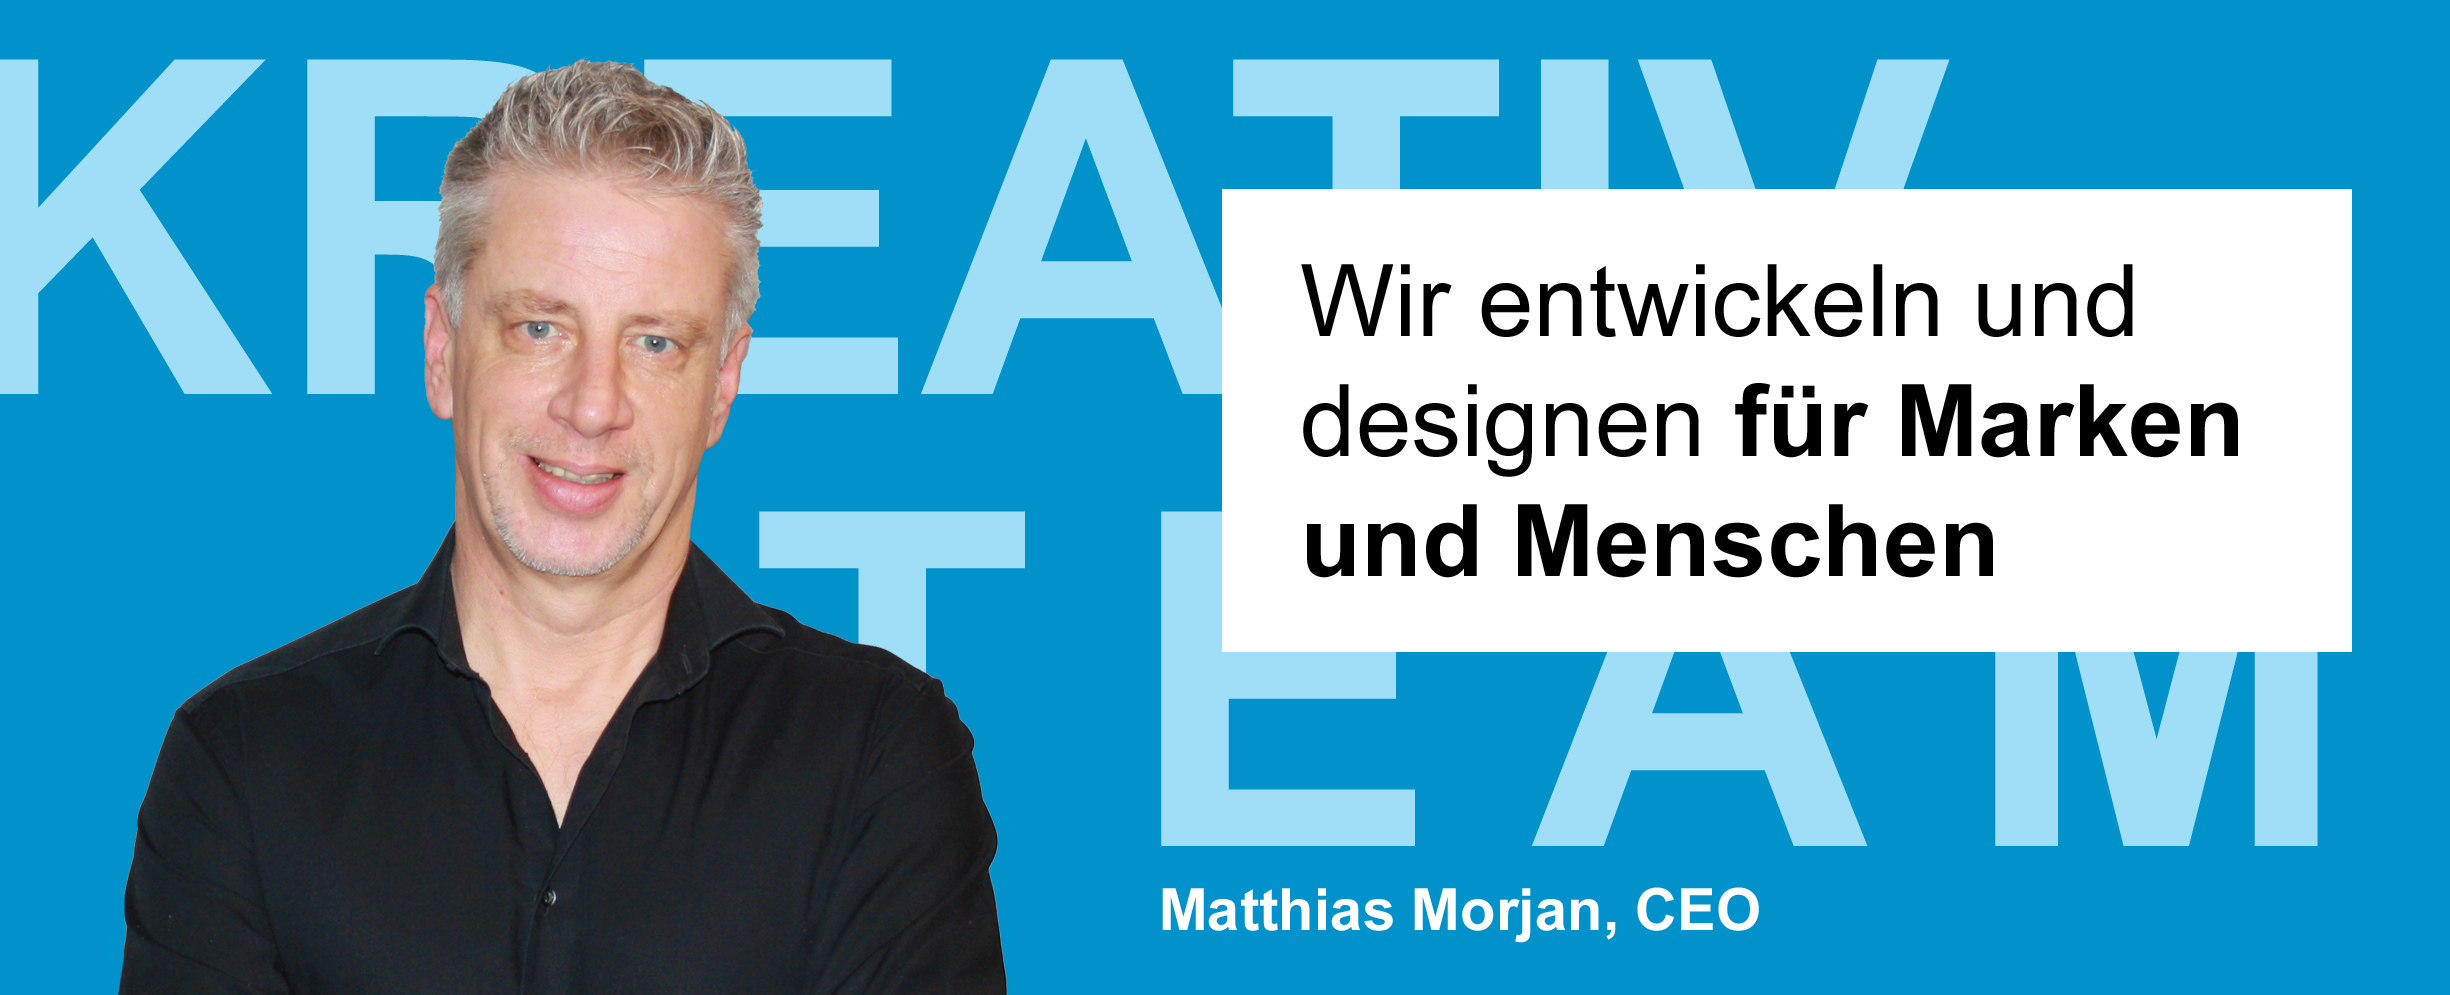 Matthias Morjan, CEO